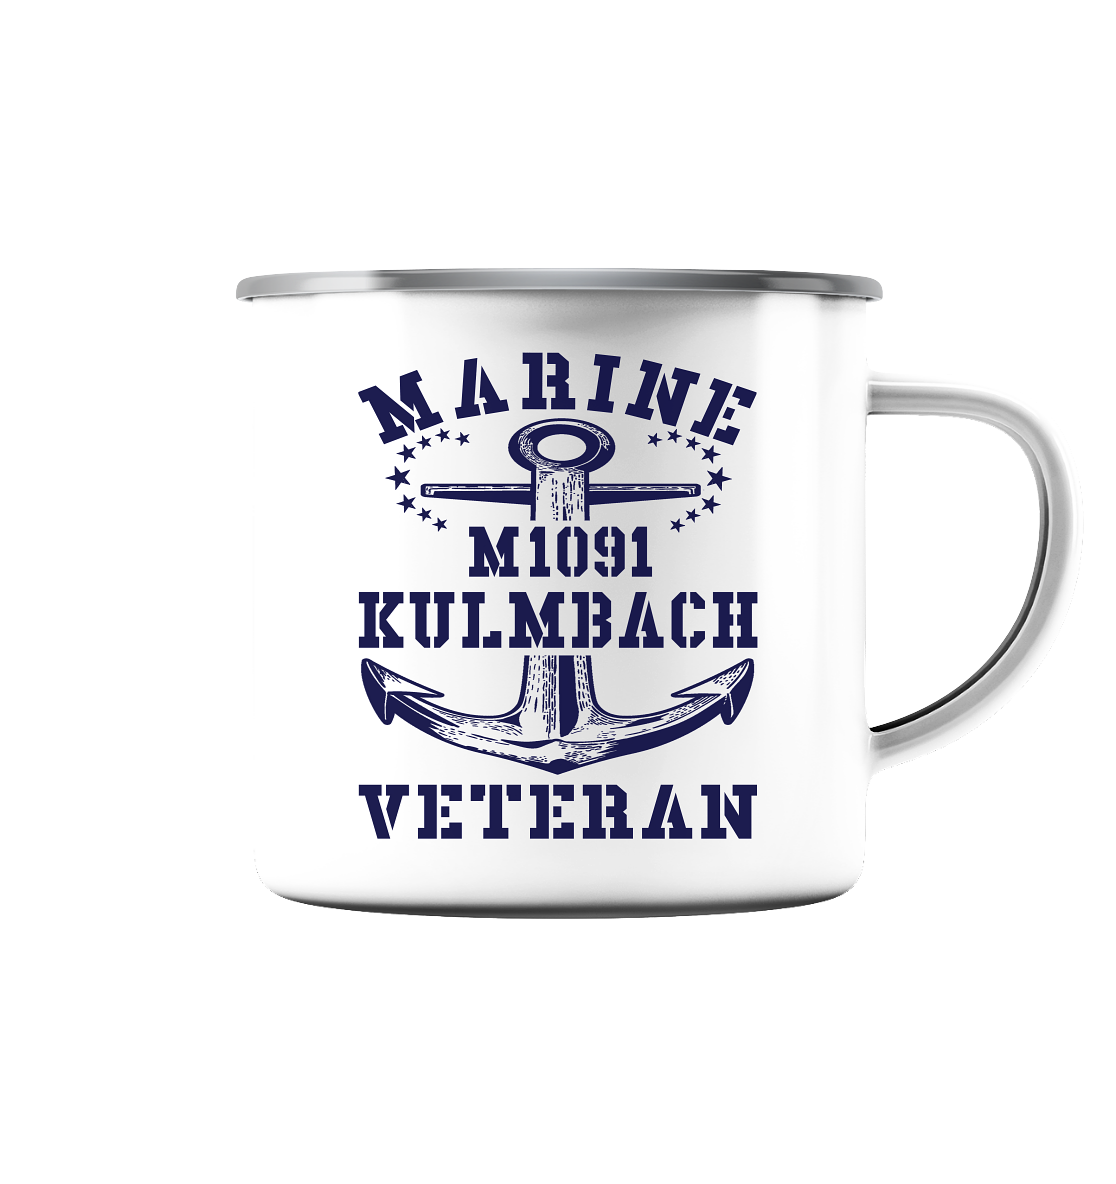 M1091 KULMBACH Marine Veteran - Emaille Tasse (Silber)